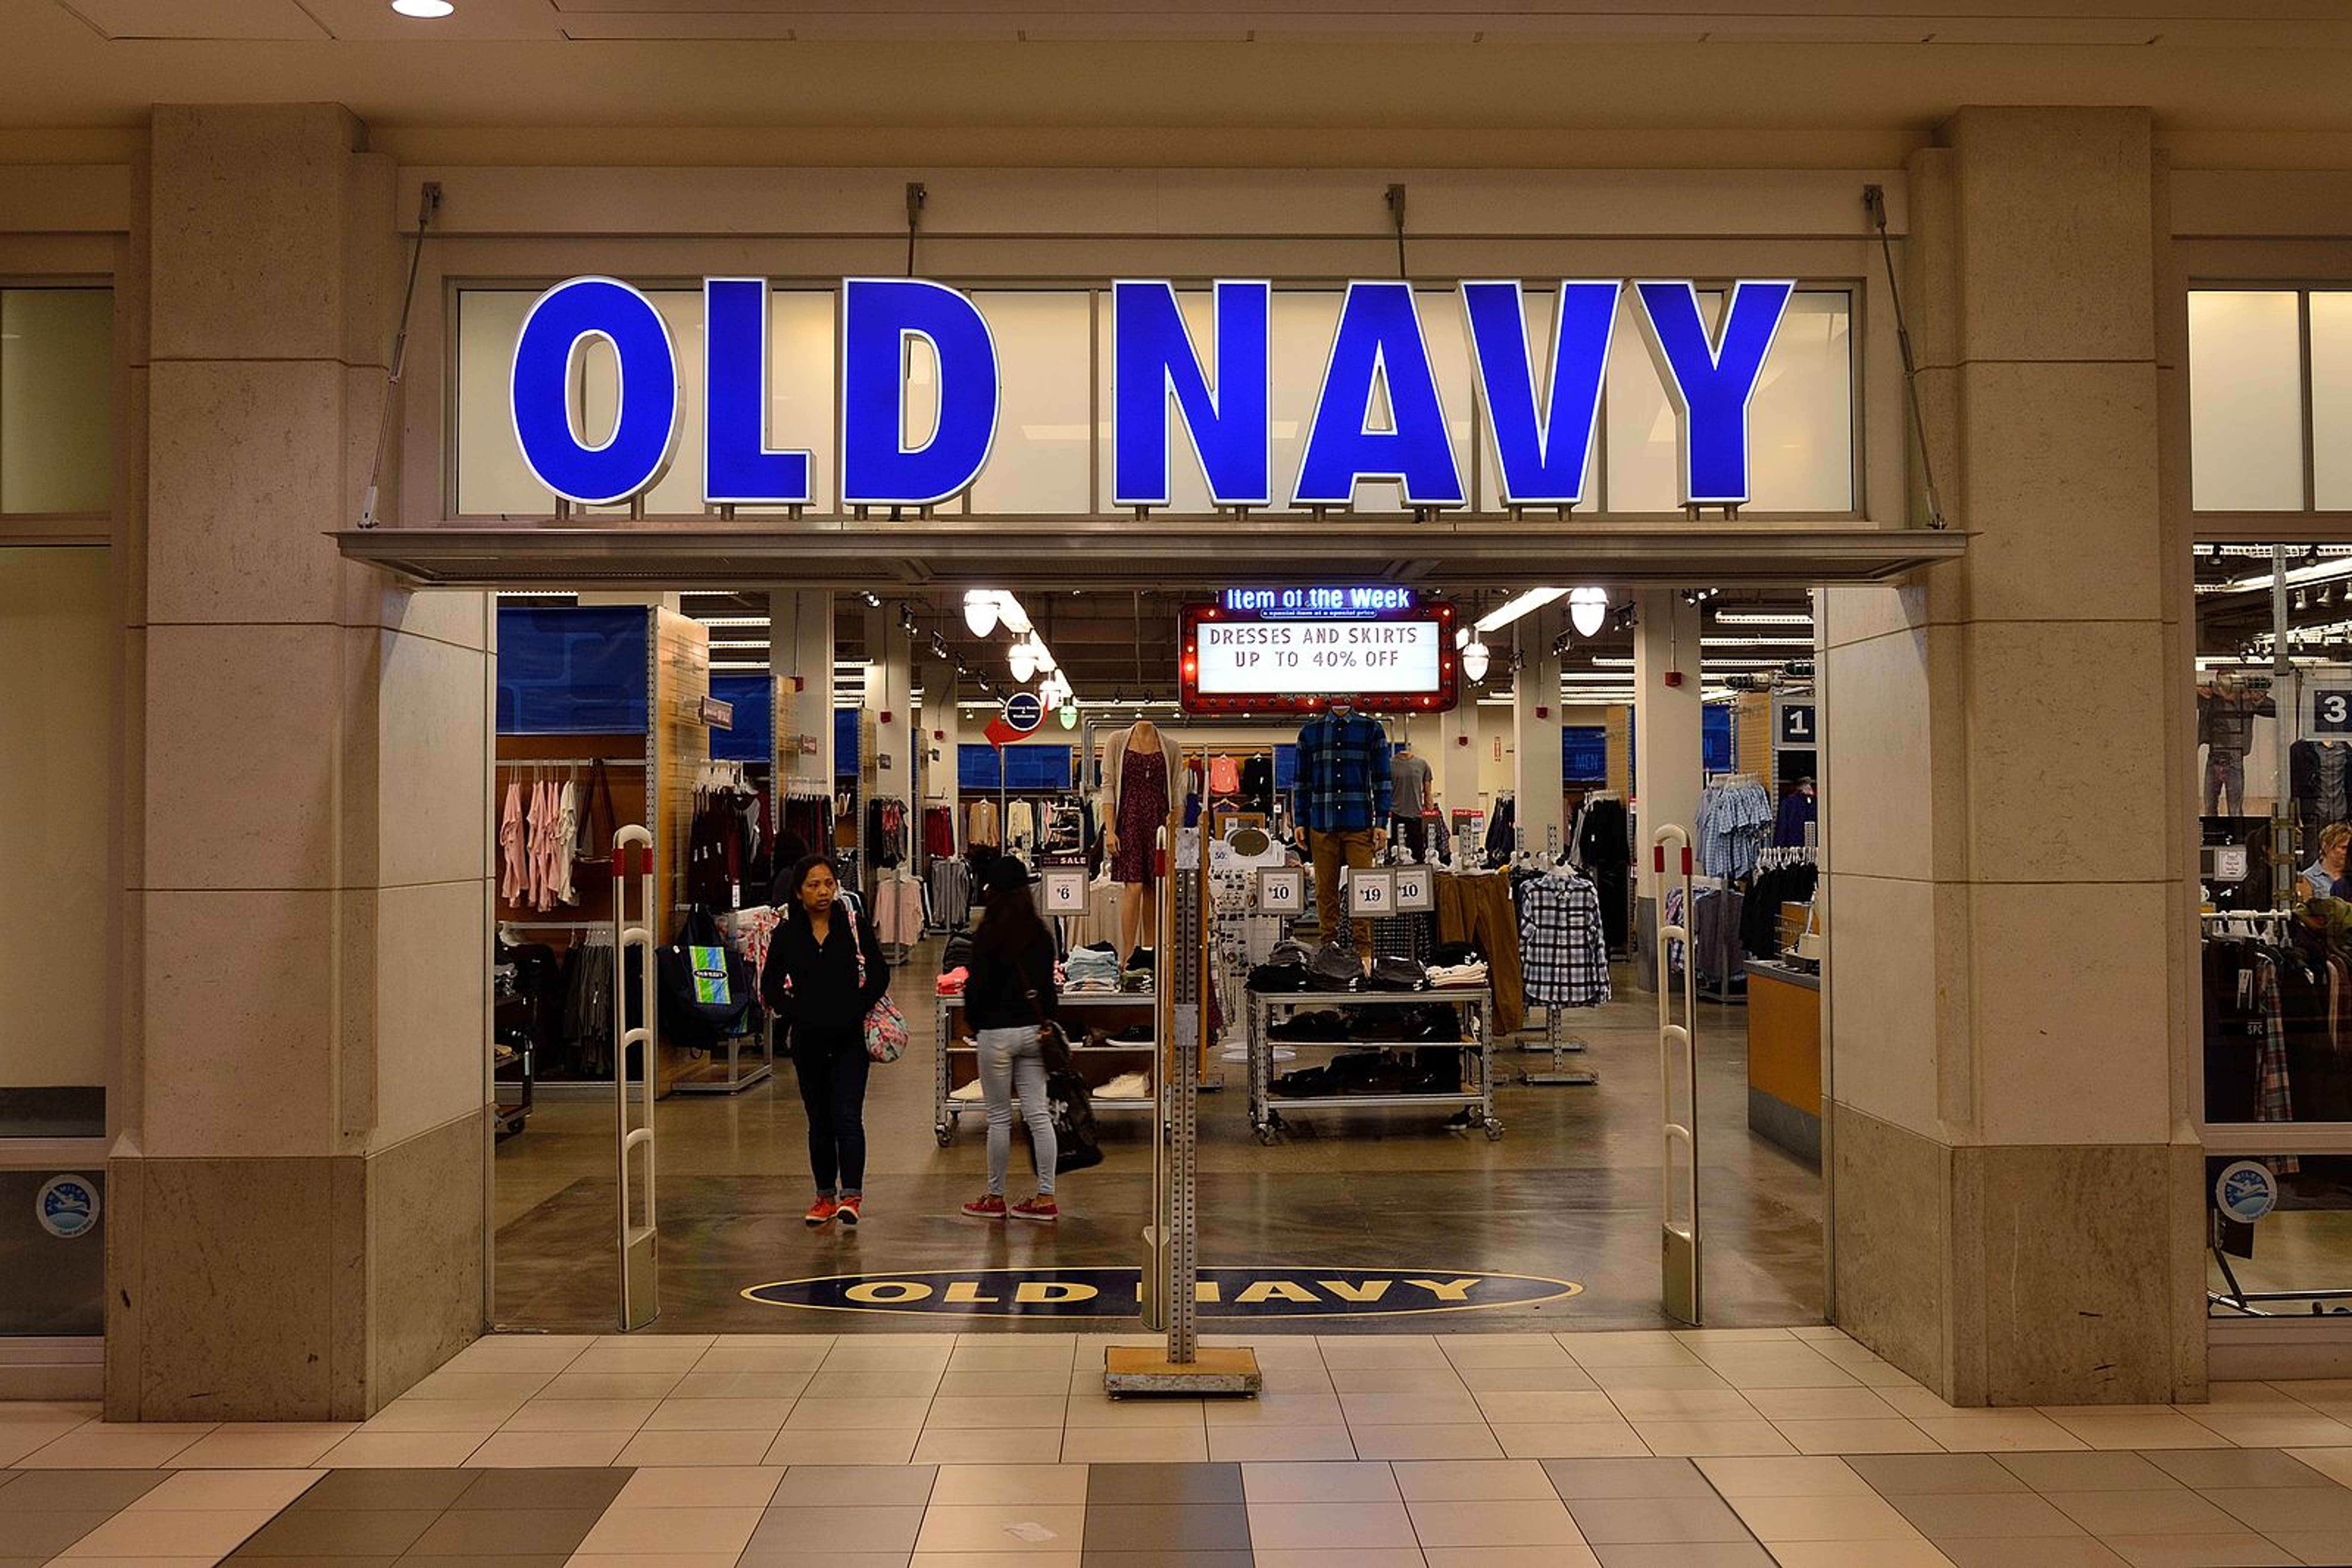 PreMarket Prep Recap: Monthly Options Expiration Volatility, Gap Cancels Old Navy Spin Off